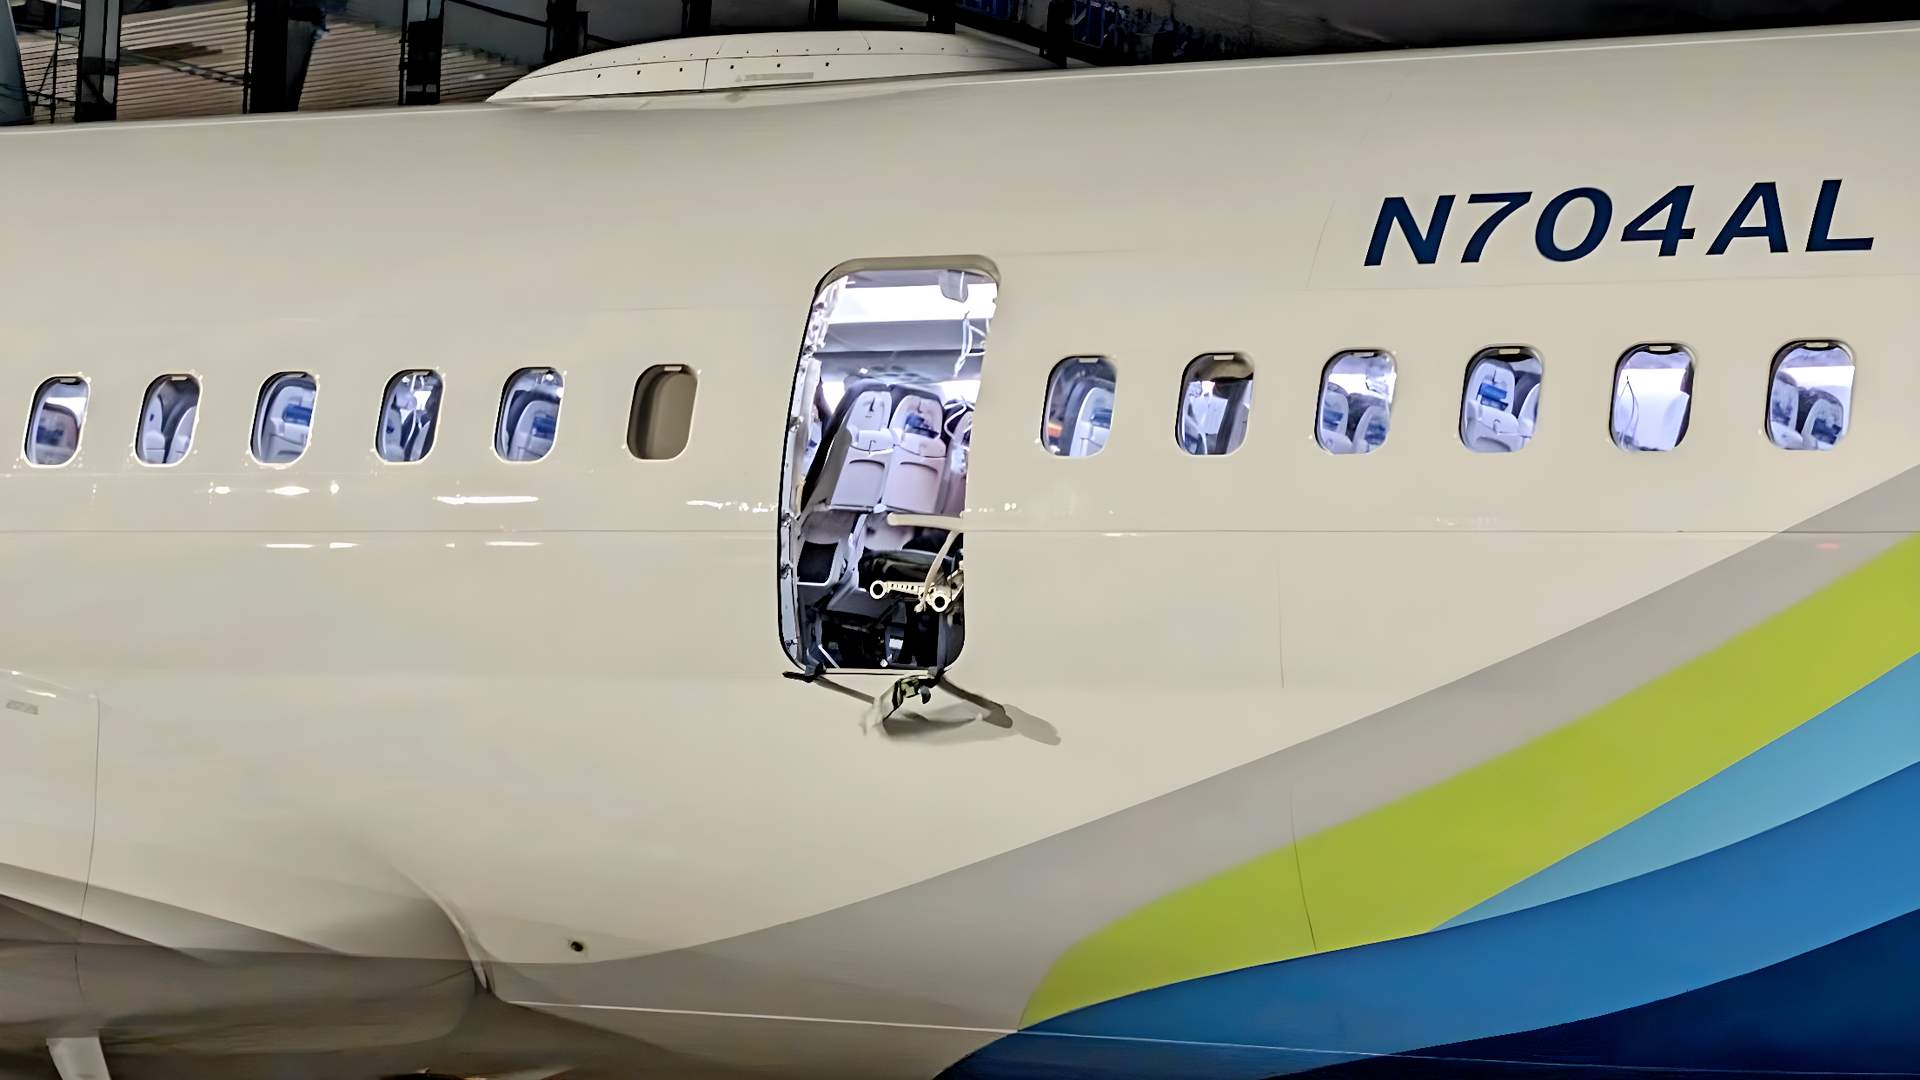 INCIDENT: Alaska Air 737 MAX-9 Loses Plugged Door In Flight